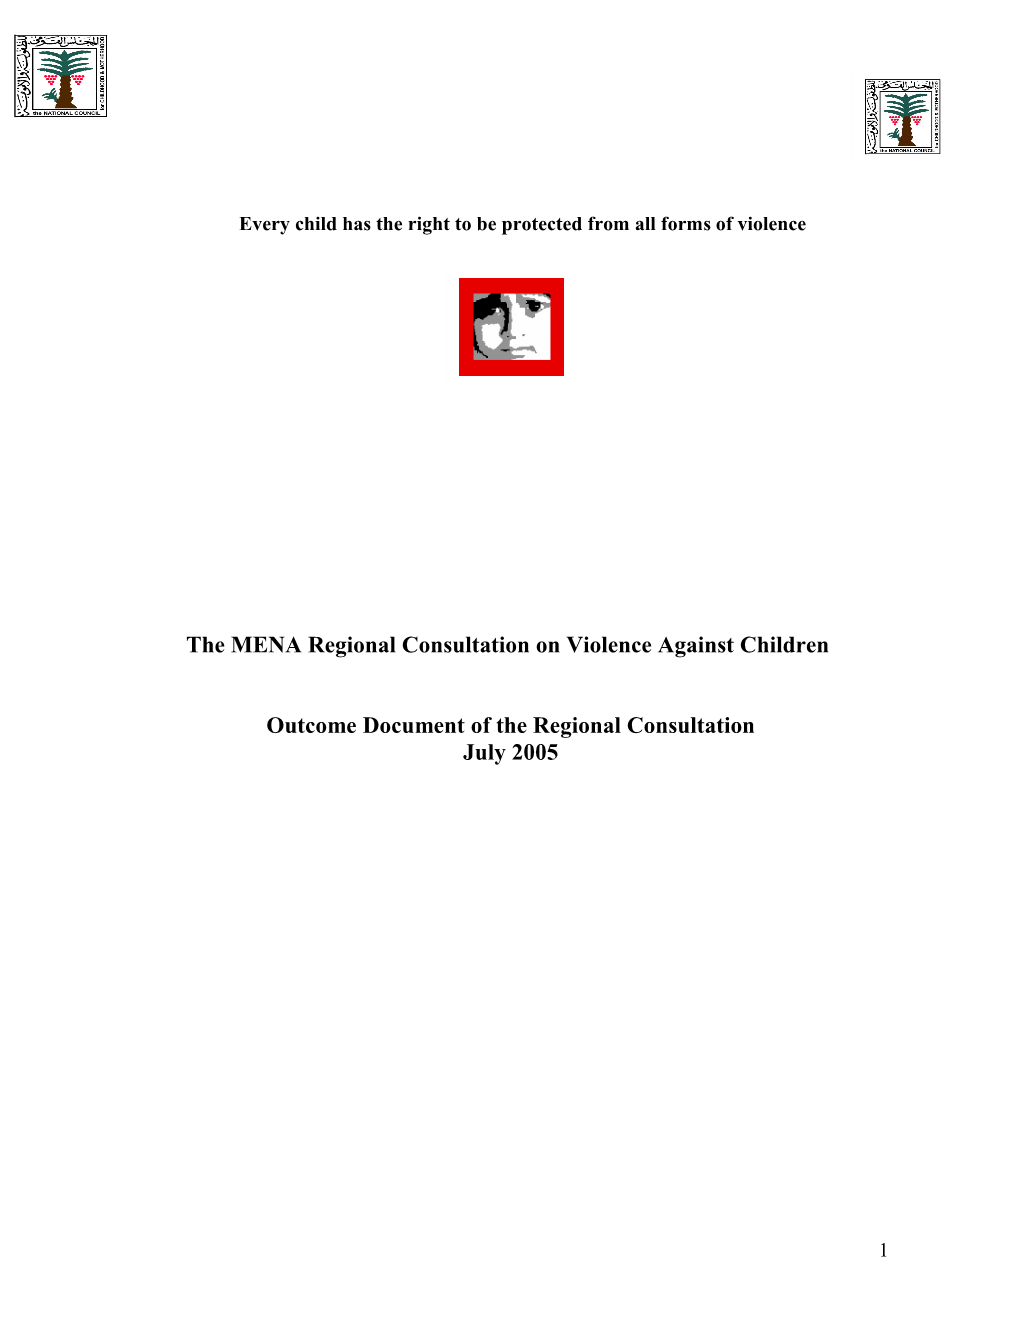 The MENA Regional Consultation on Violence Against Children